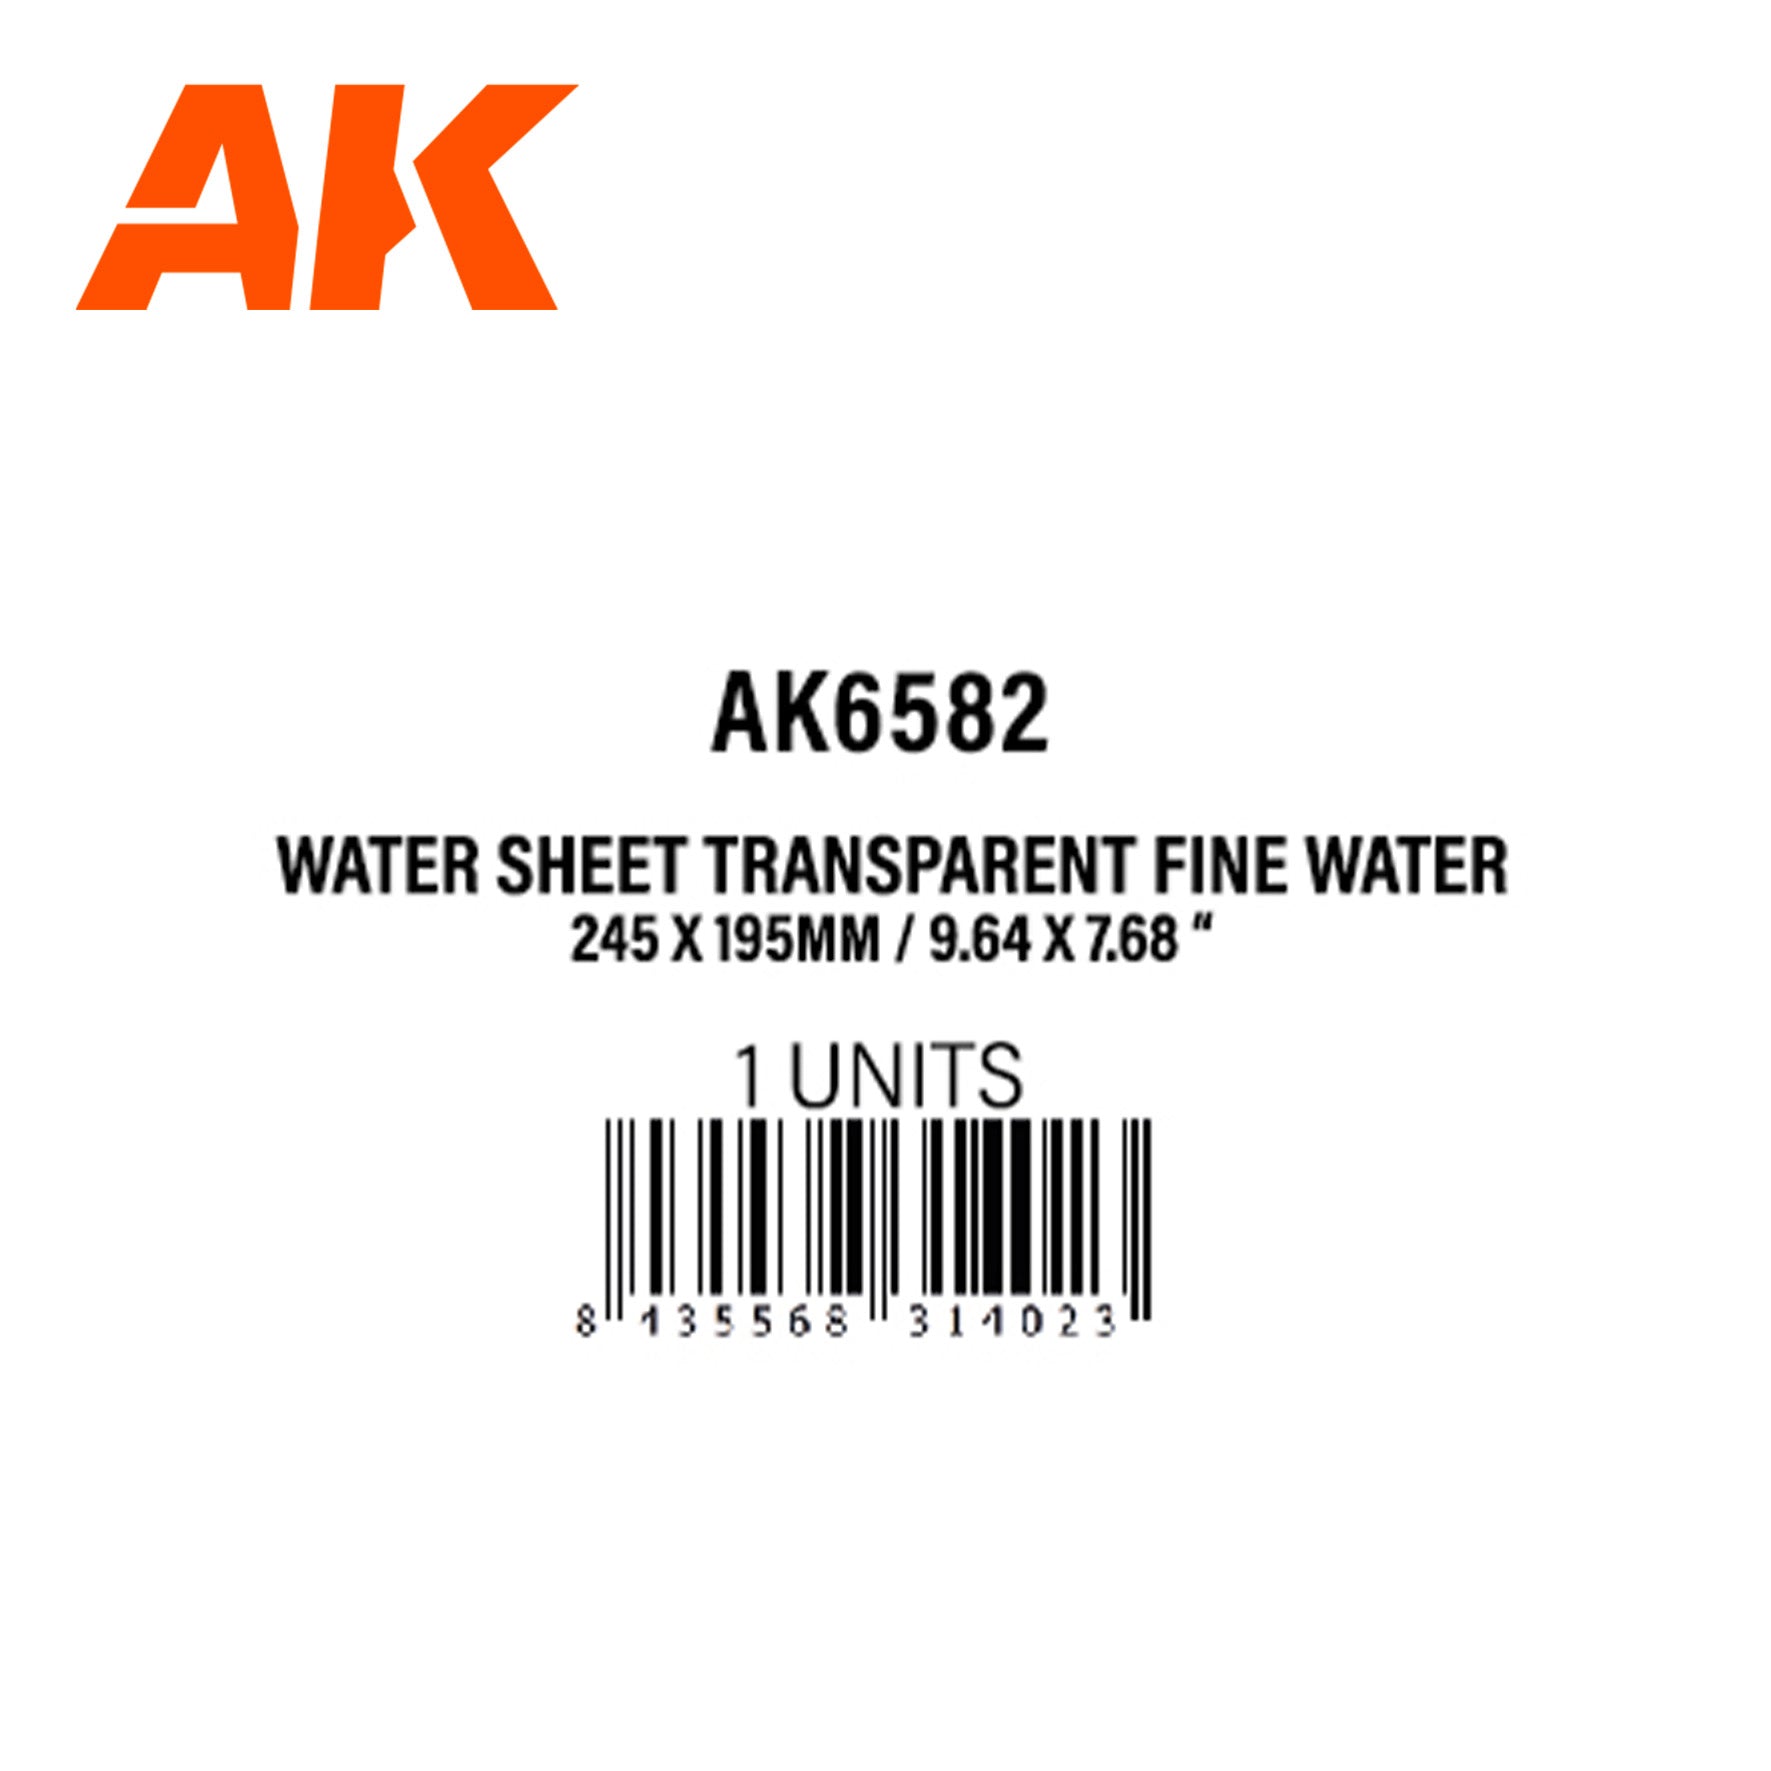 AK6582 - Water Sheet Transparent FINE WATER - 245 x 195mm